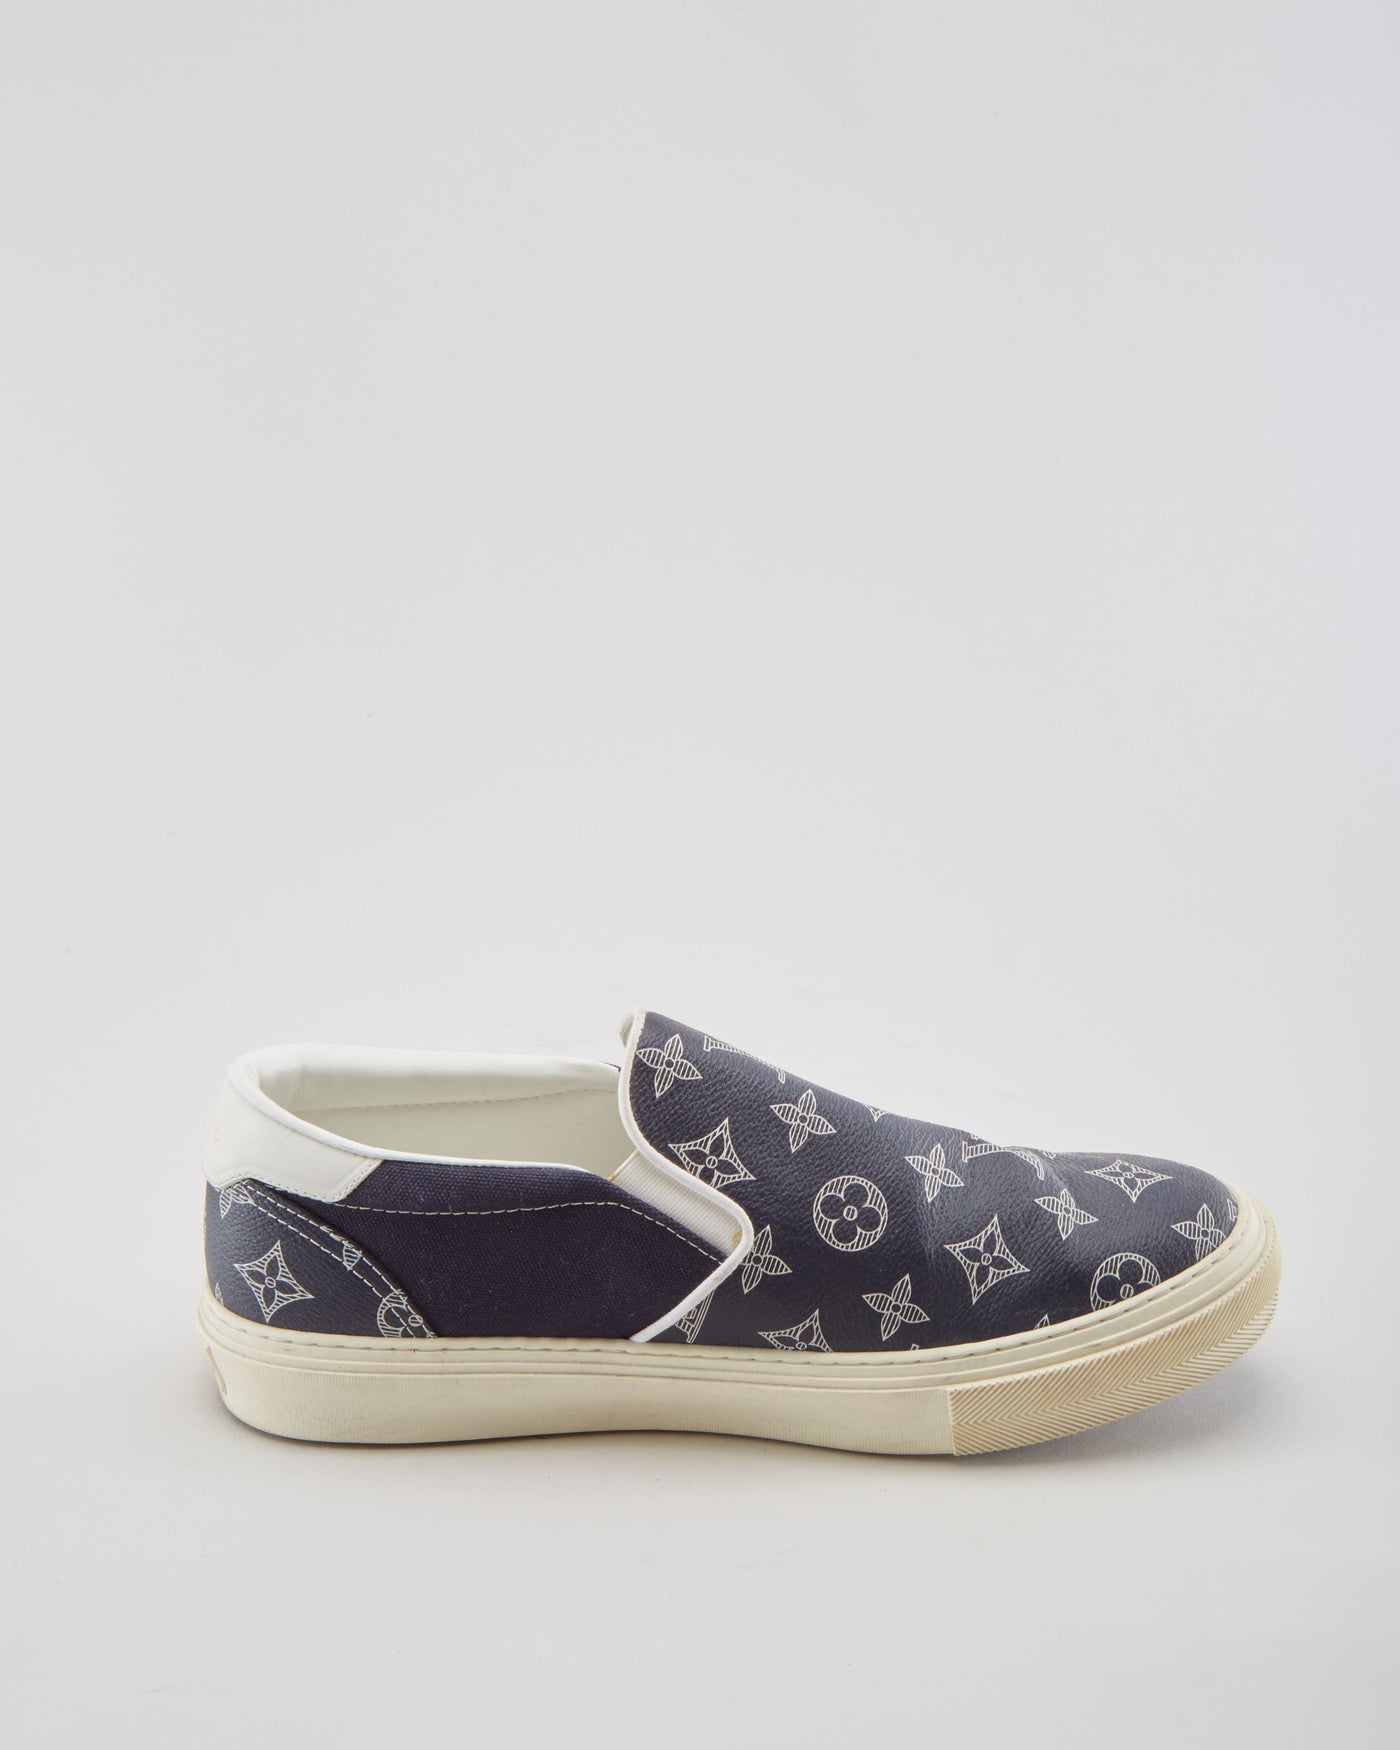 Louis Vuitton LV Trocadero Leather Slip On Shoes - Mens UK 9